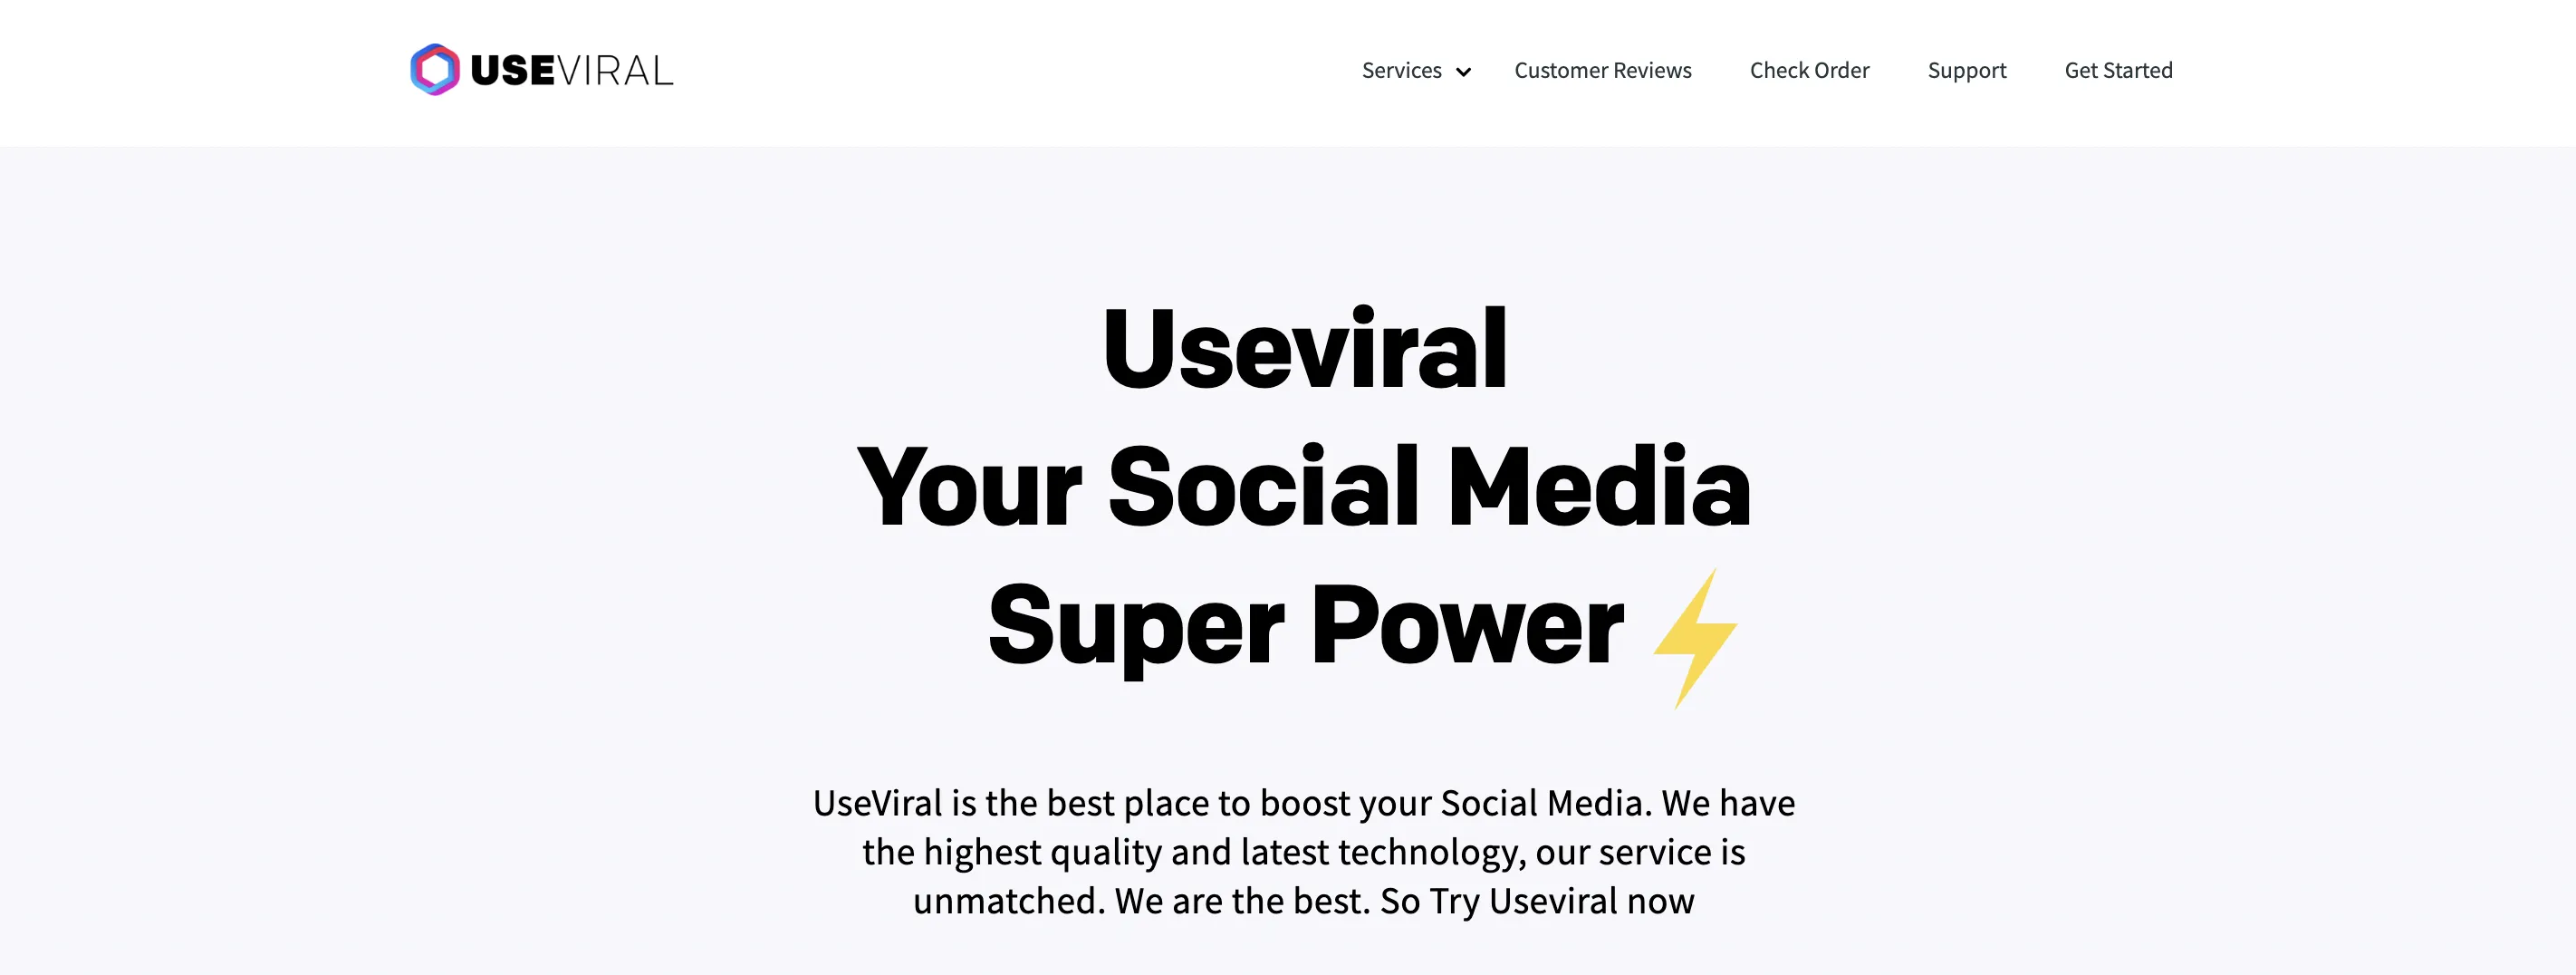 useviral Homepage Image